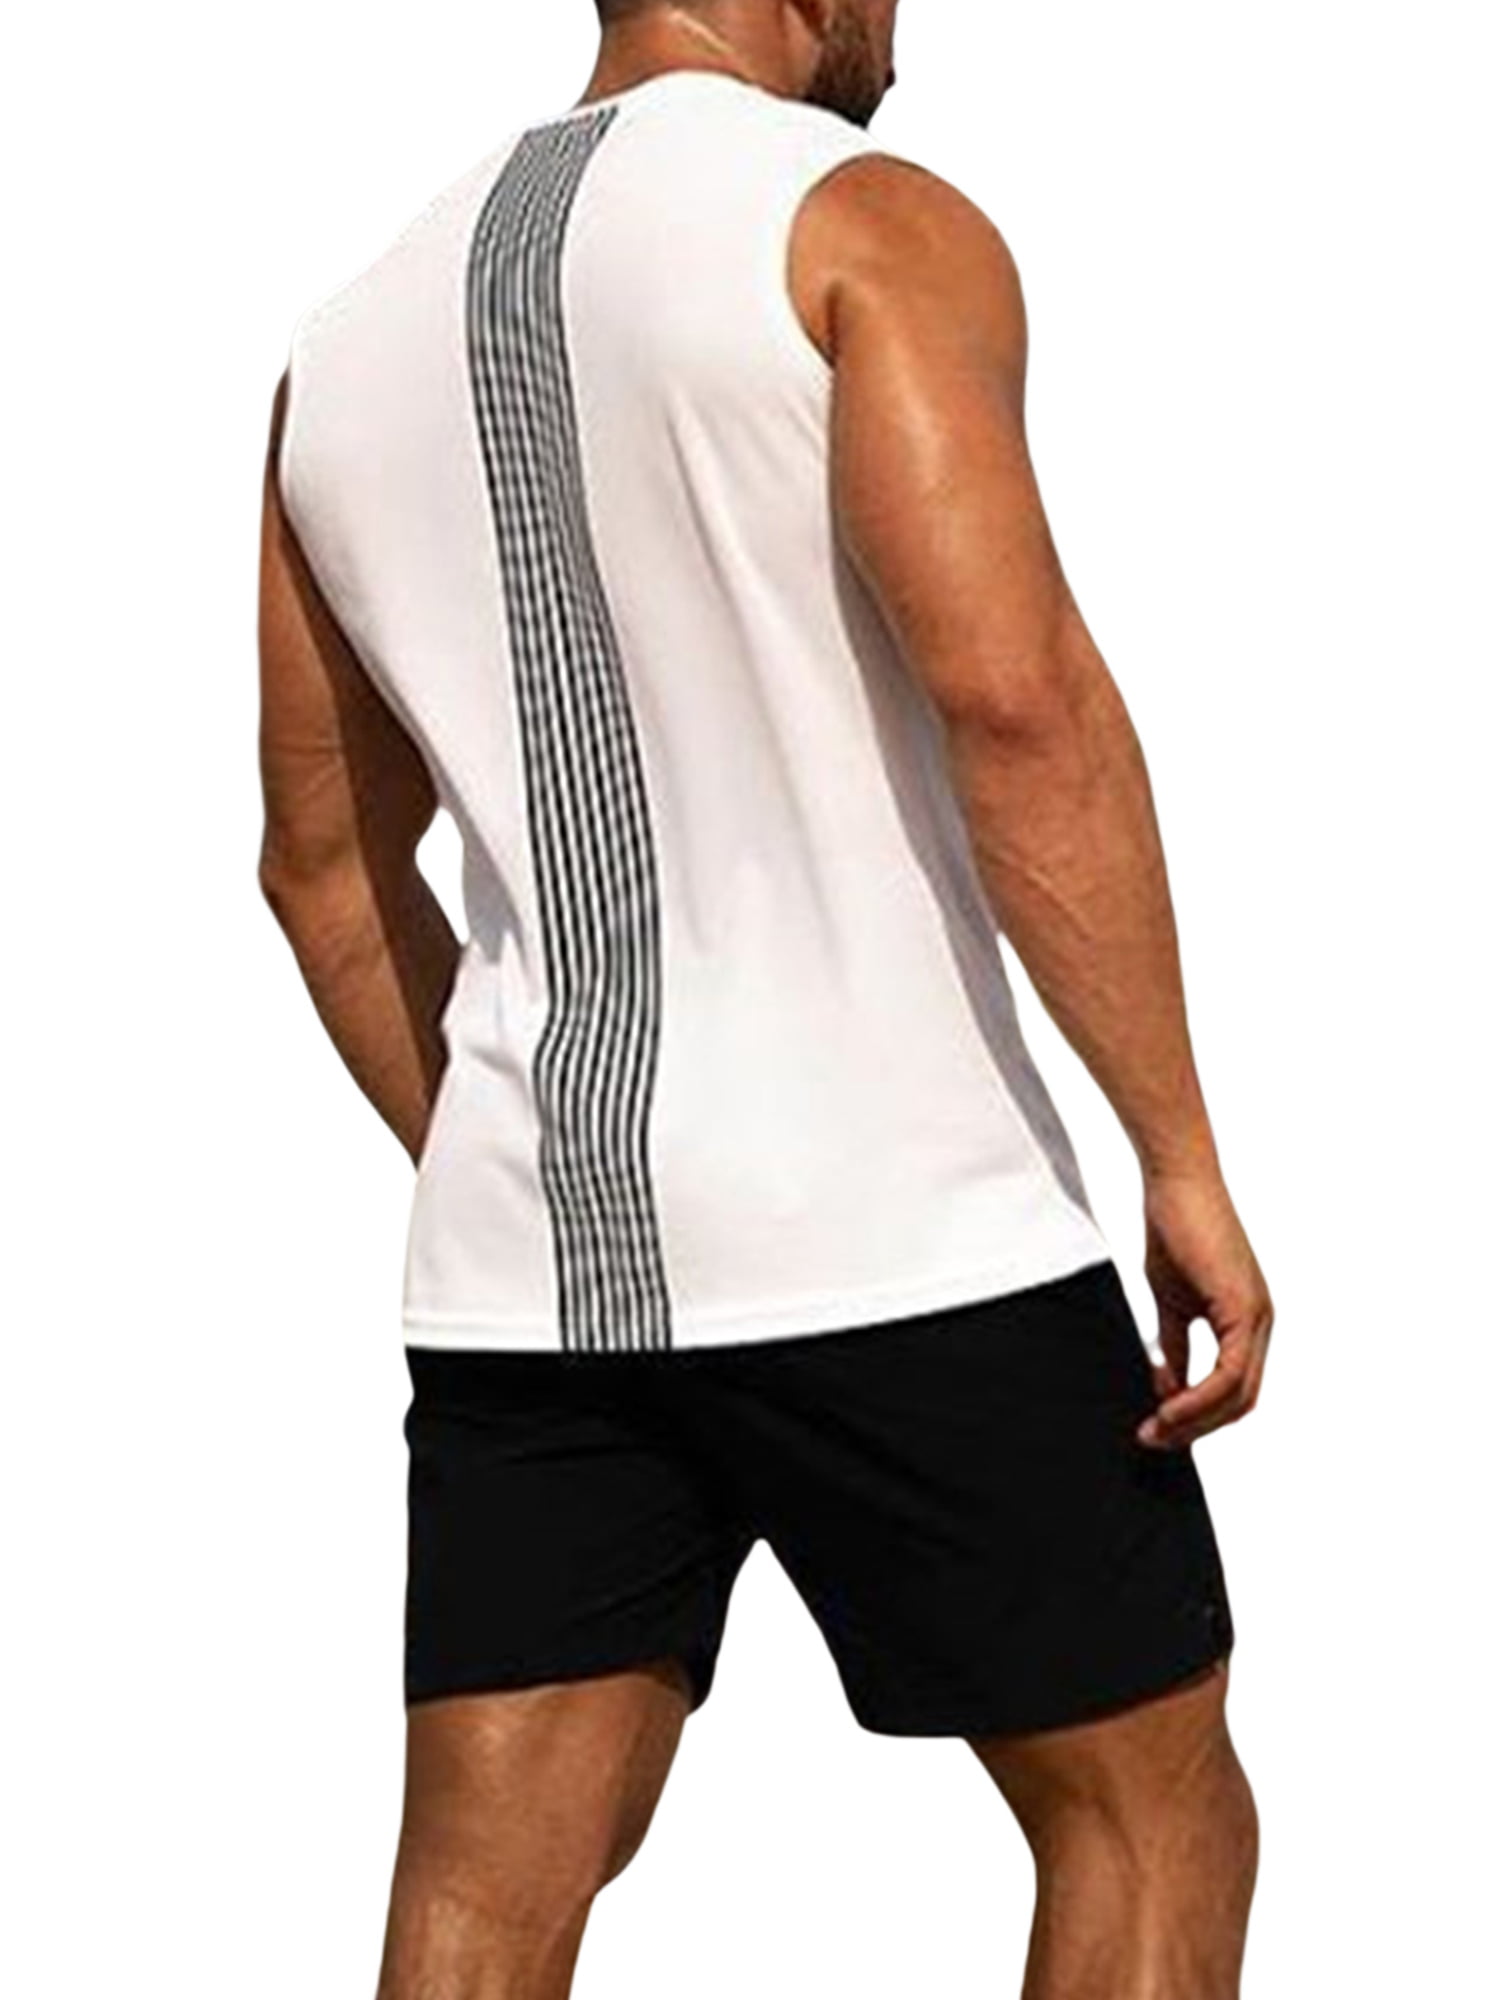 Details about   Gorilla Wear Cotton Sleeveless Tank Top Men Muscle Bodybuilding Workout Gym Vest 